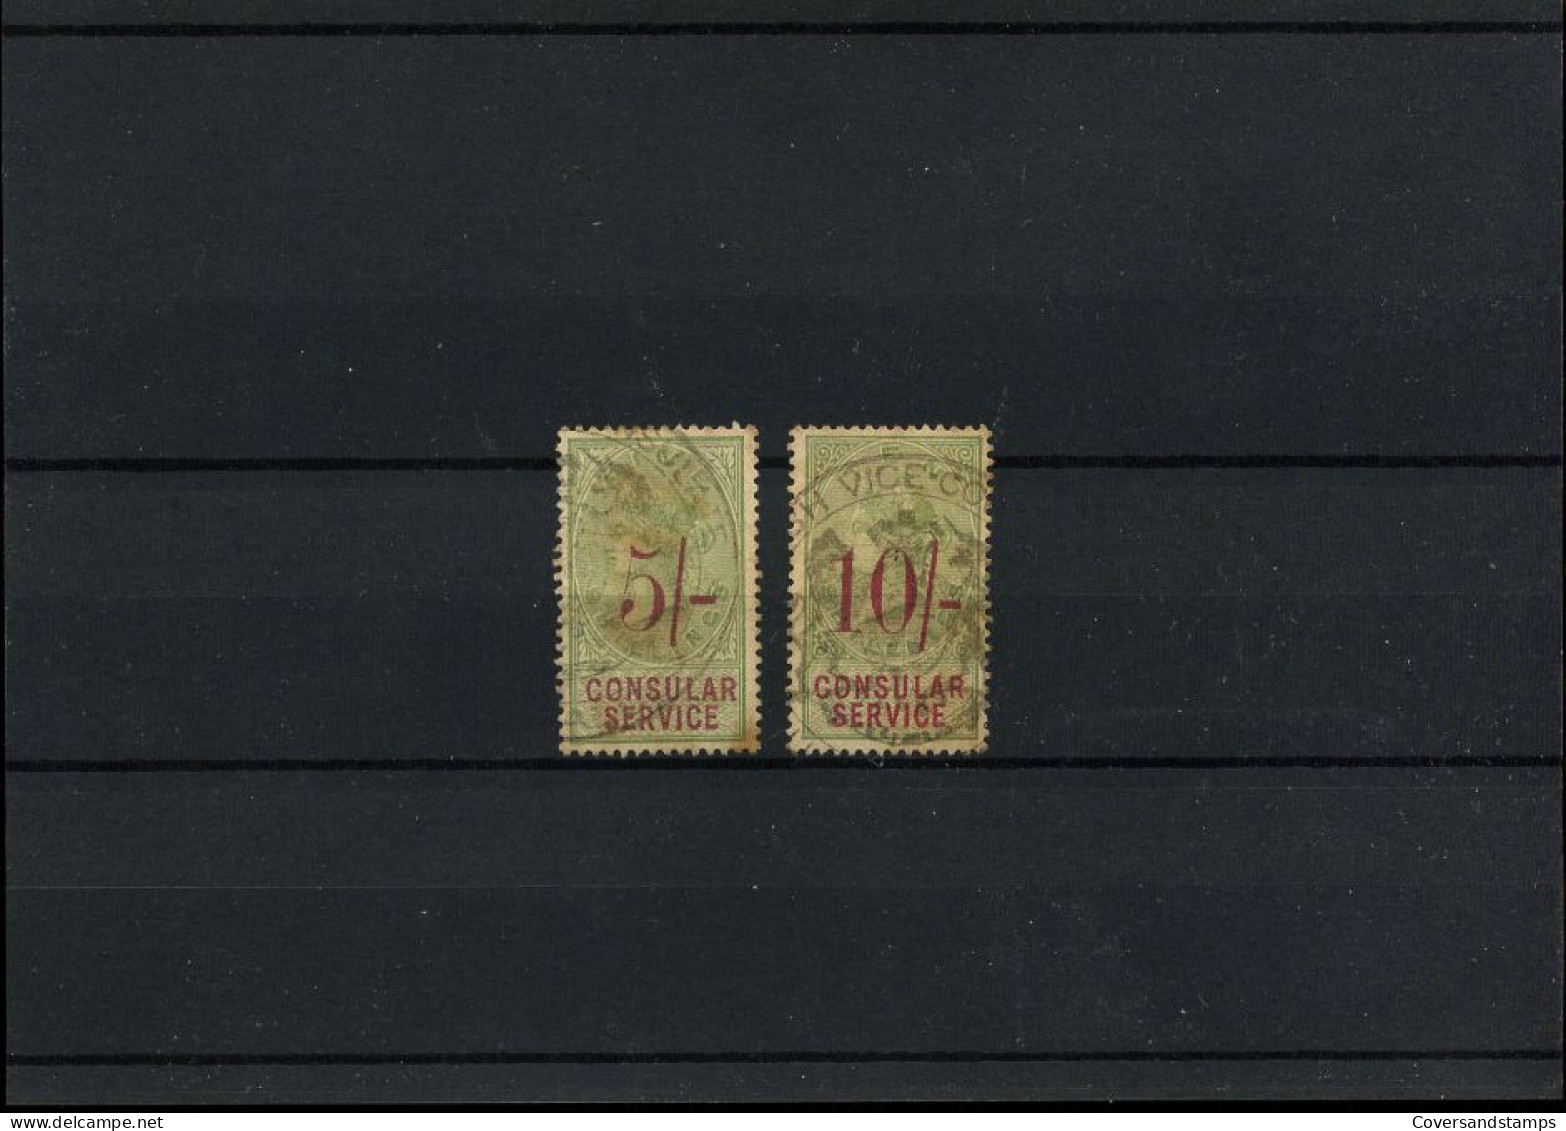 Great-Britain - Consular Service - Used - Revenue Stamps